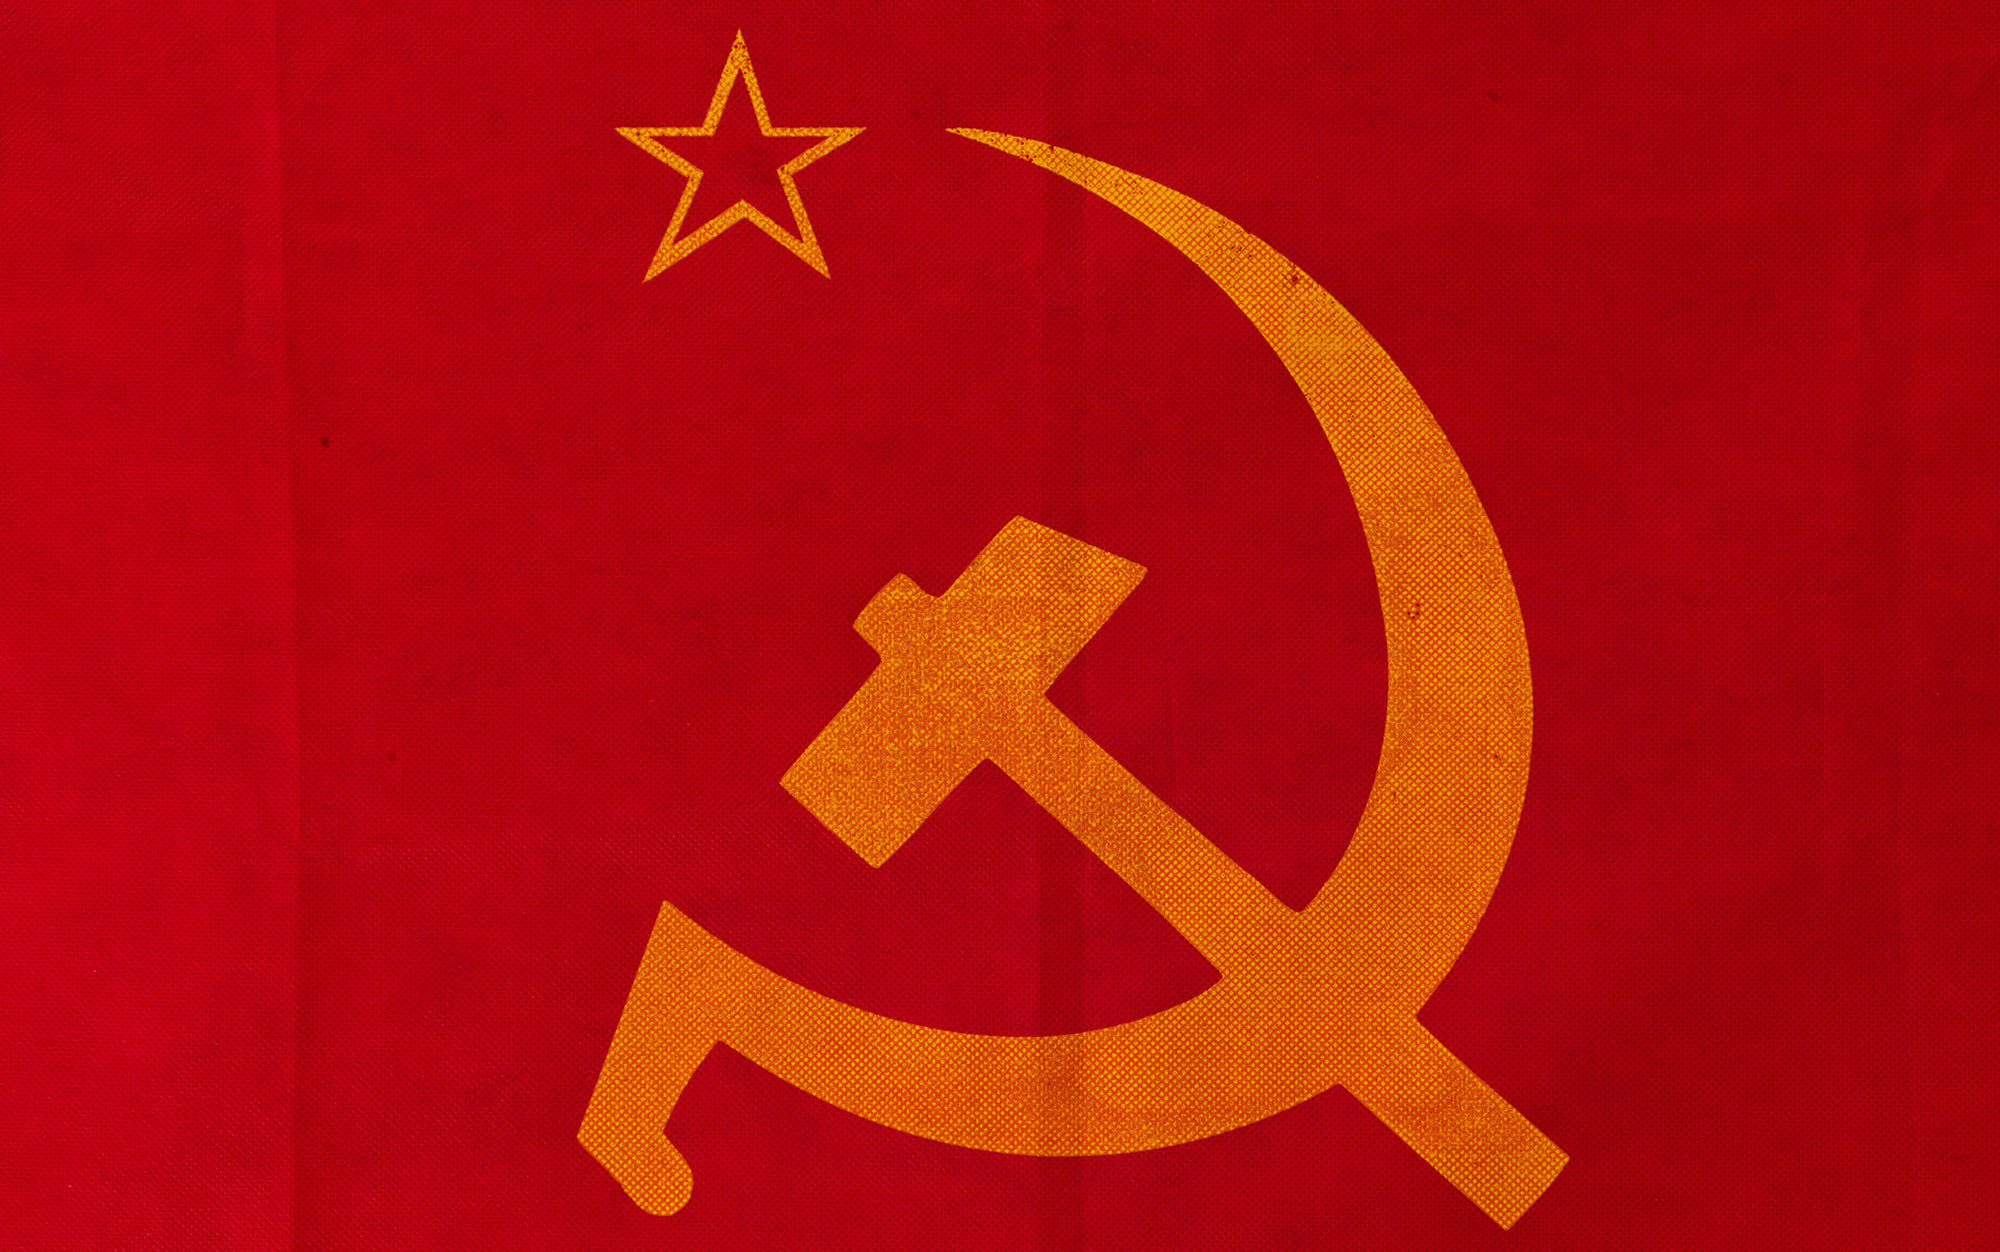 The Communist logo